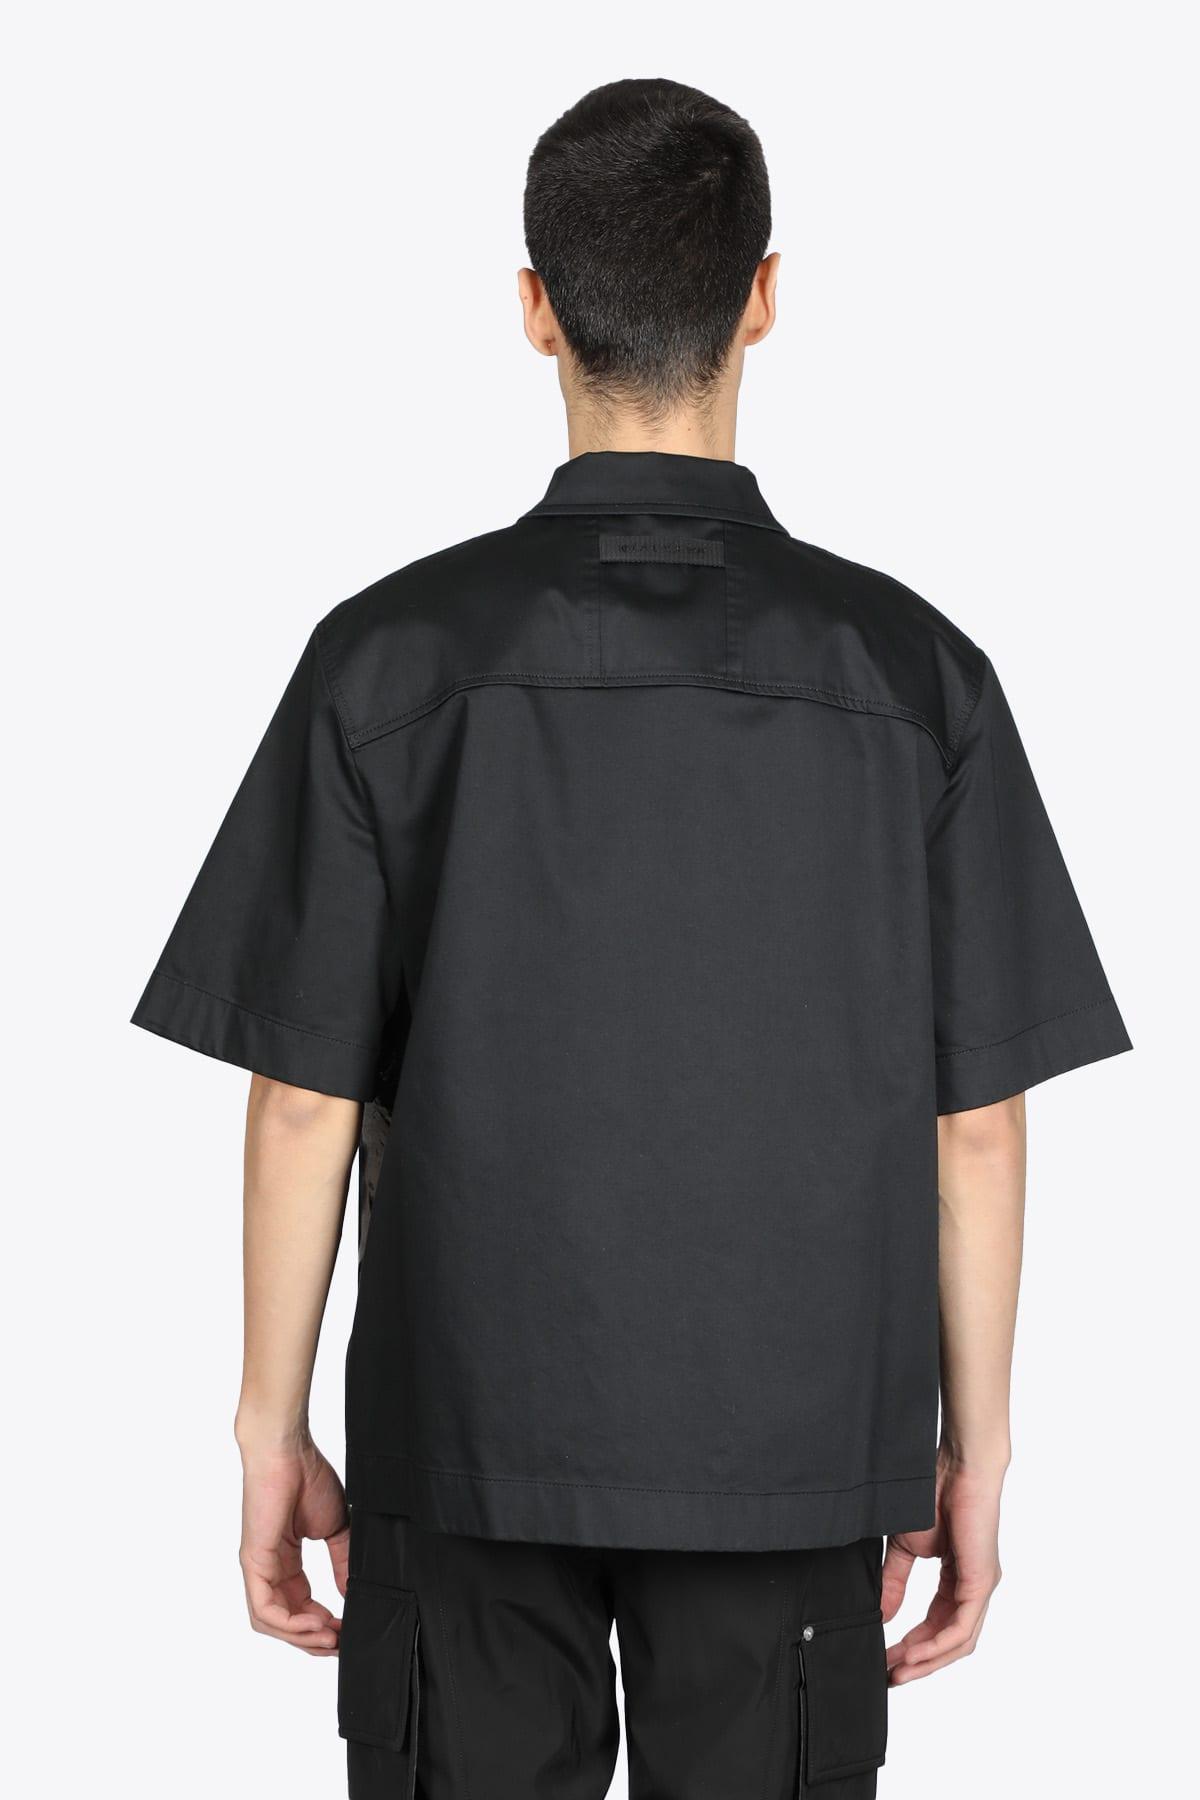 1017 ALYX 9SM Graphic Zip S/s Shirt Black Cotton Short Sleeved 